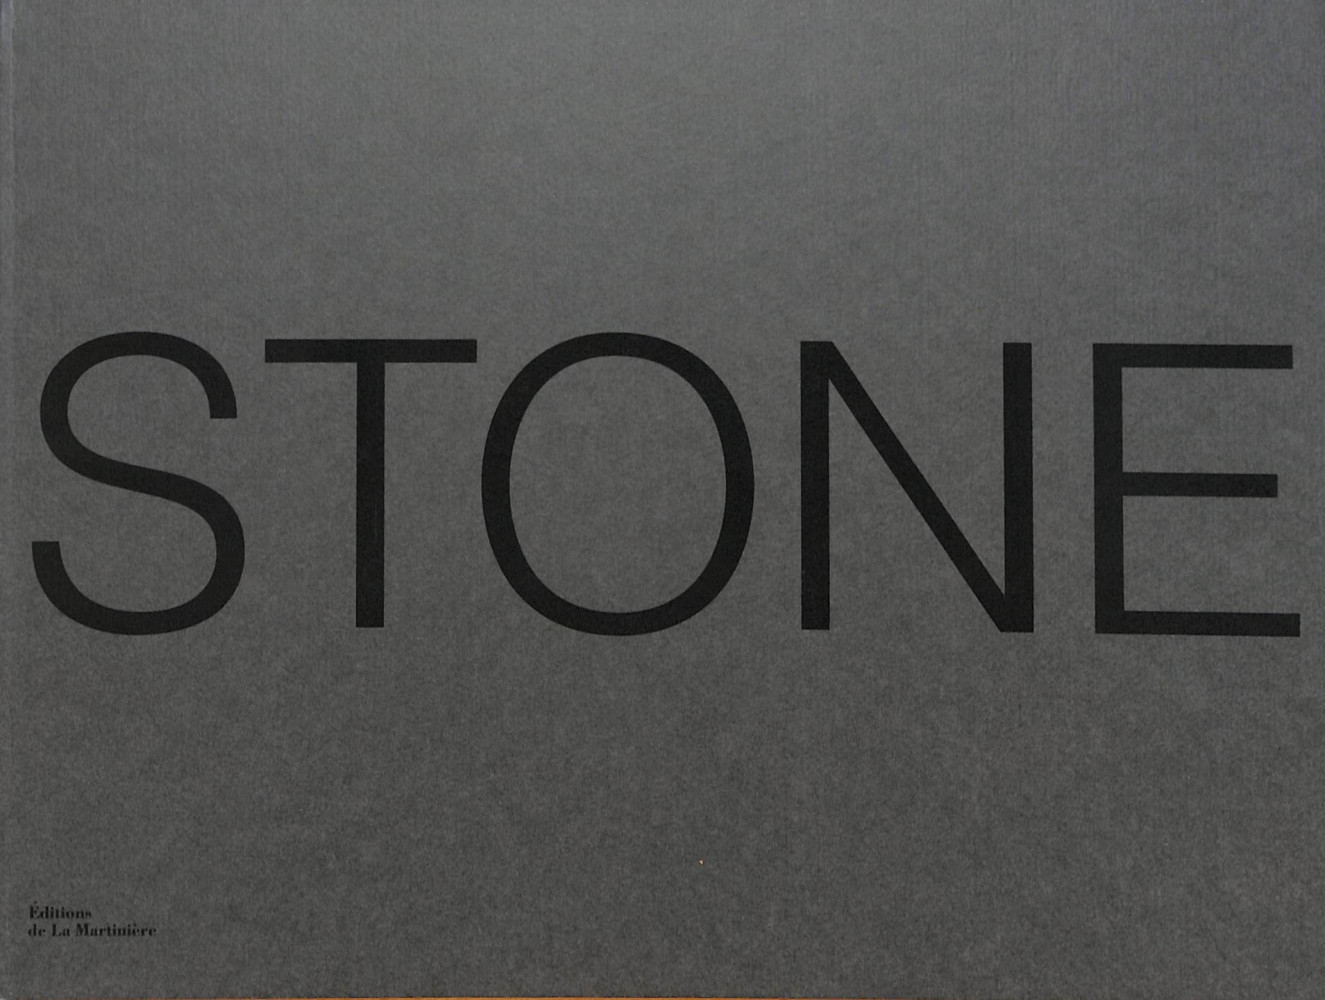 Limestone - Joseph Koudelka